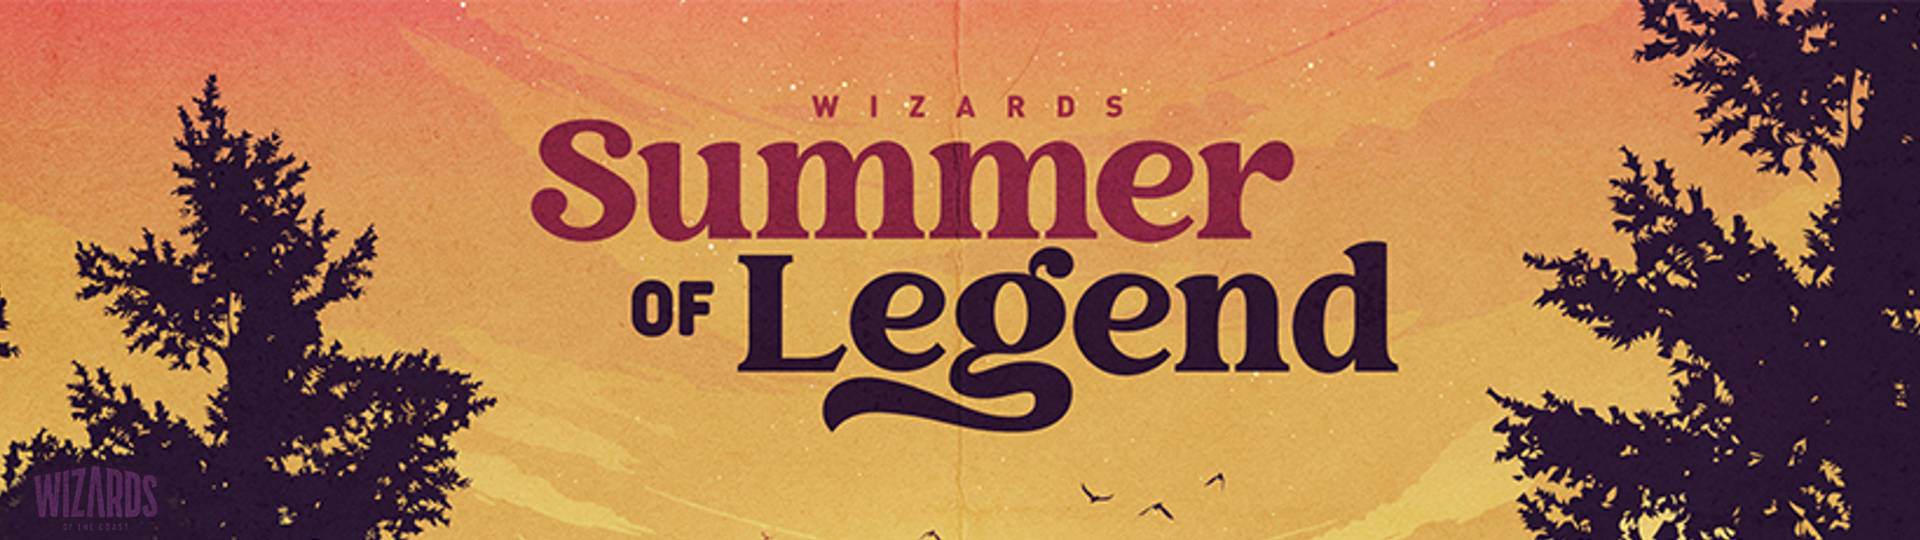 Magic the Gathering Summer of Legend slice